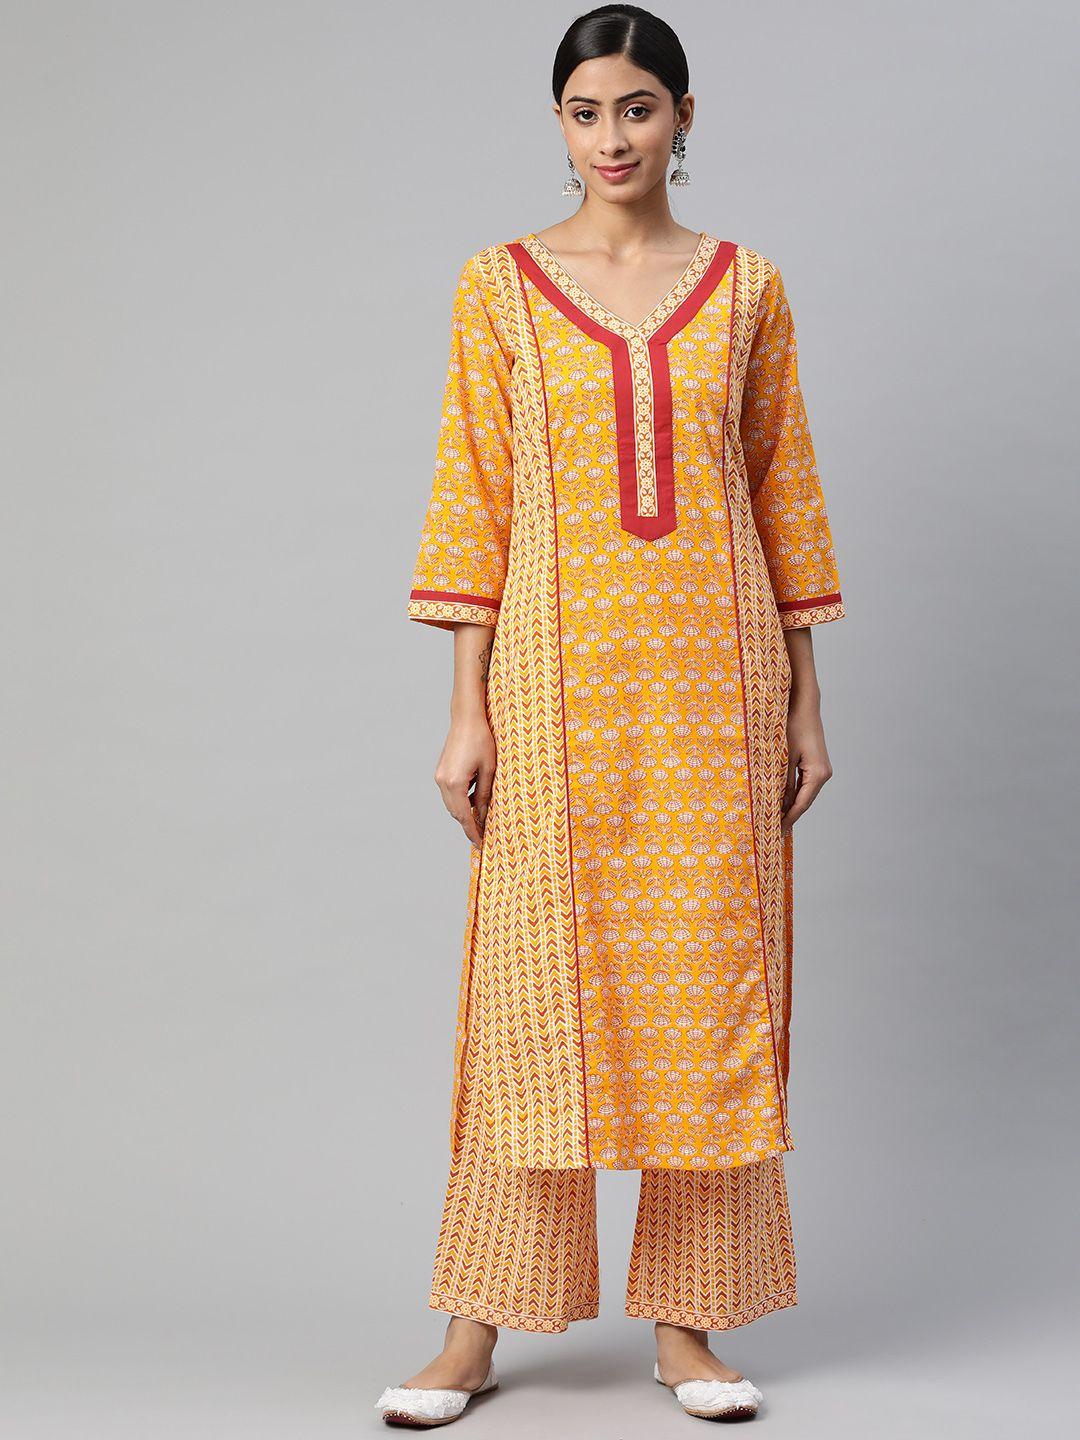 svarchi-women-yellow-ethnic-motifs-printed-kurta-with-palazzos